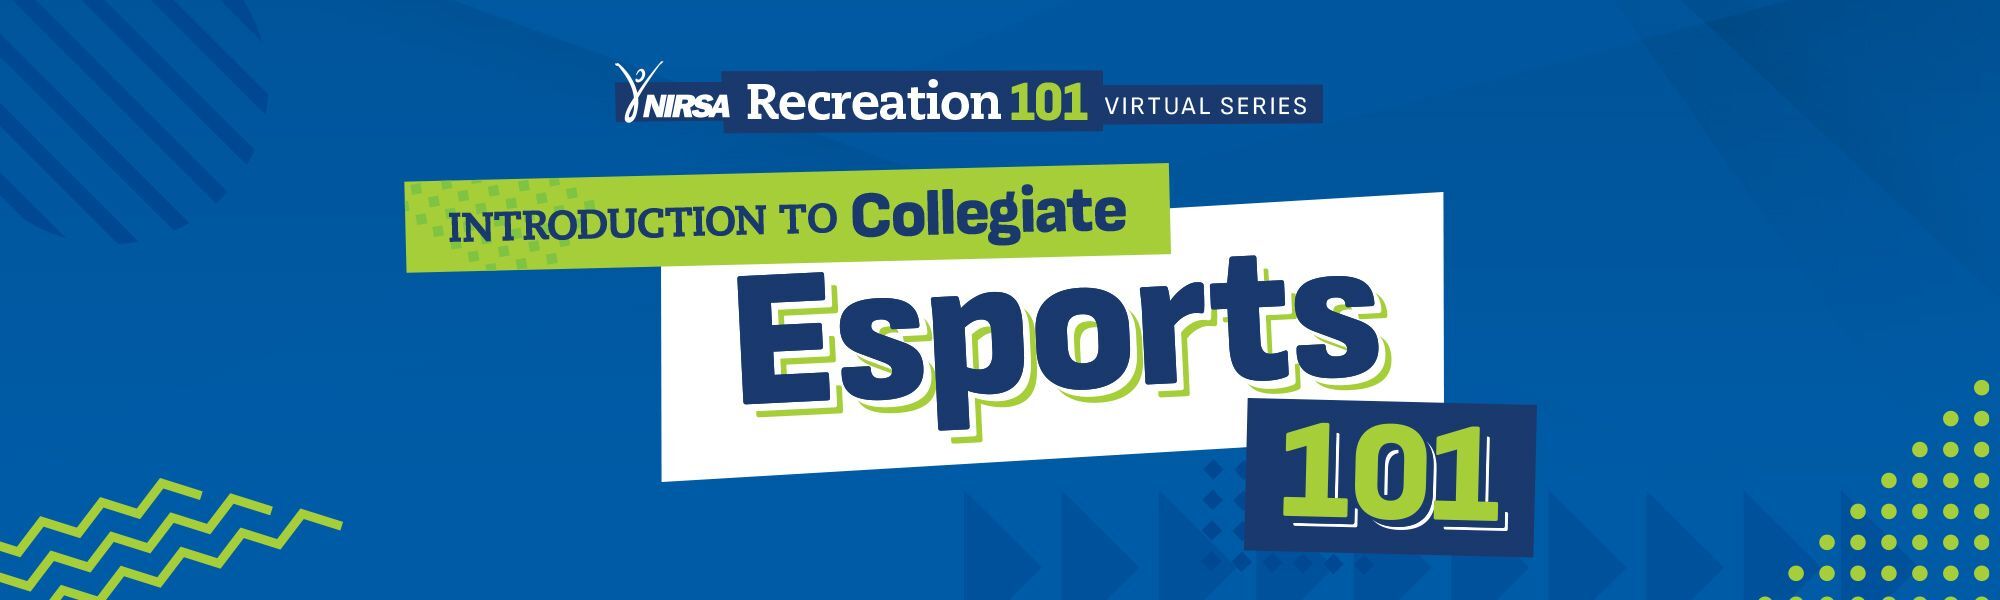 Introduction to Collegiate Esports 101